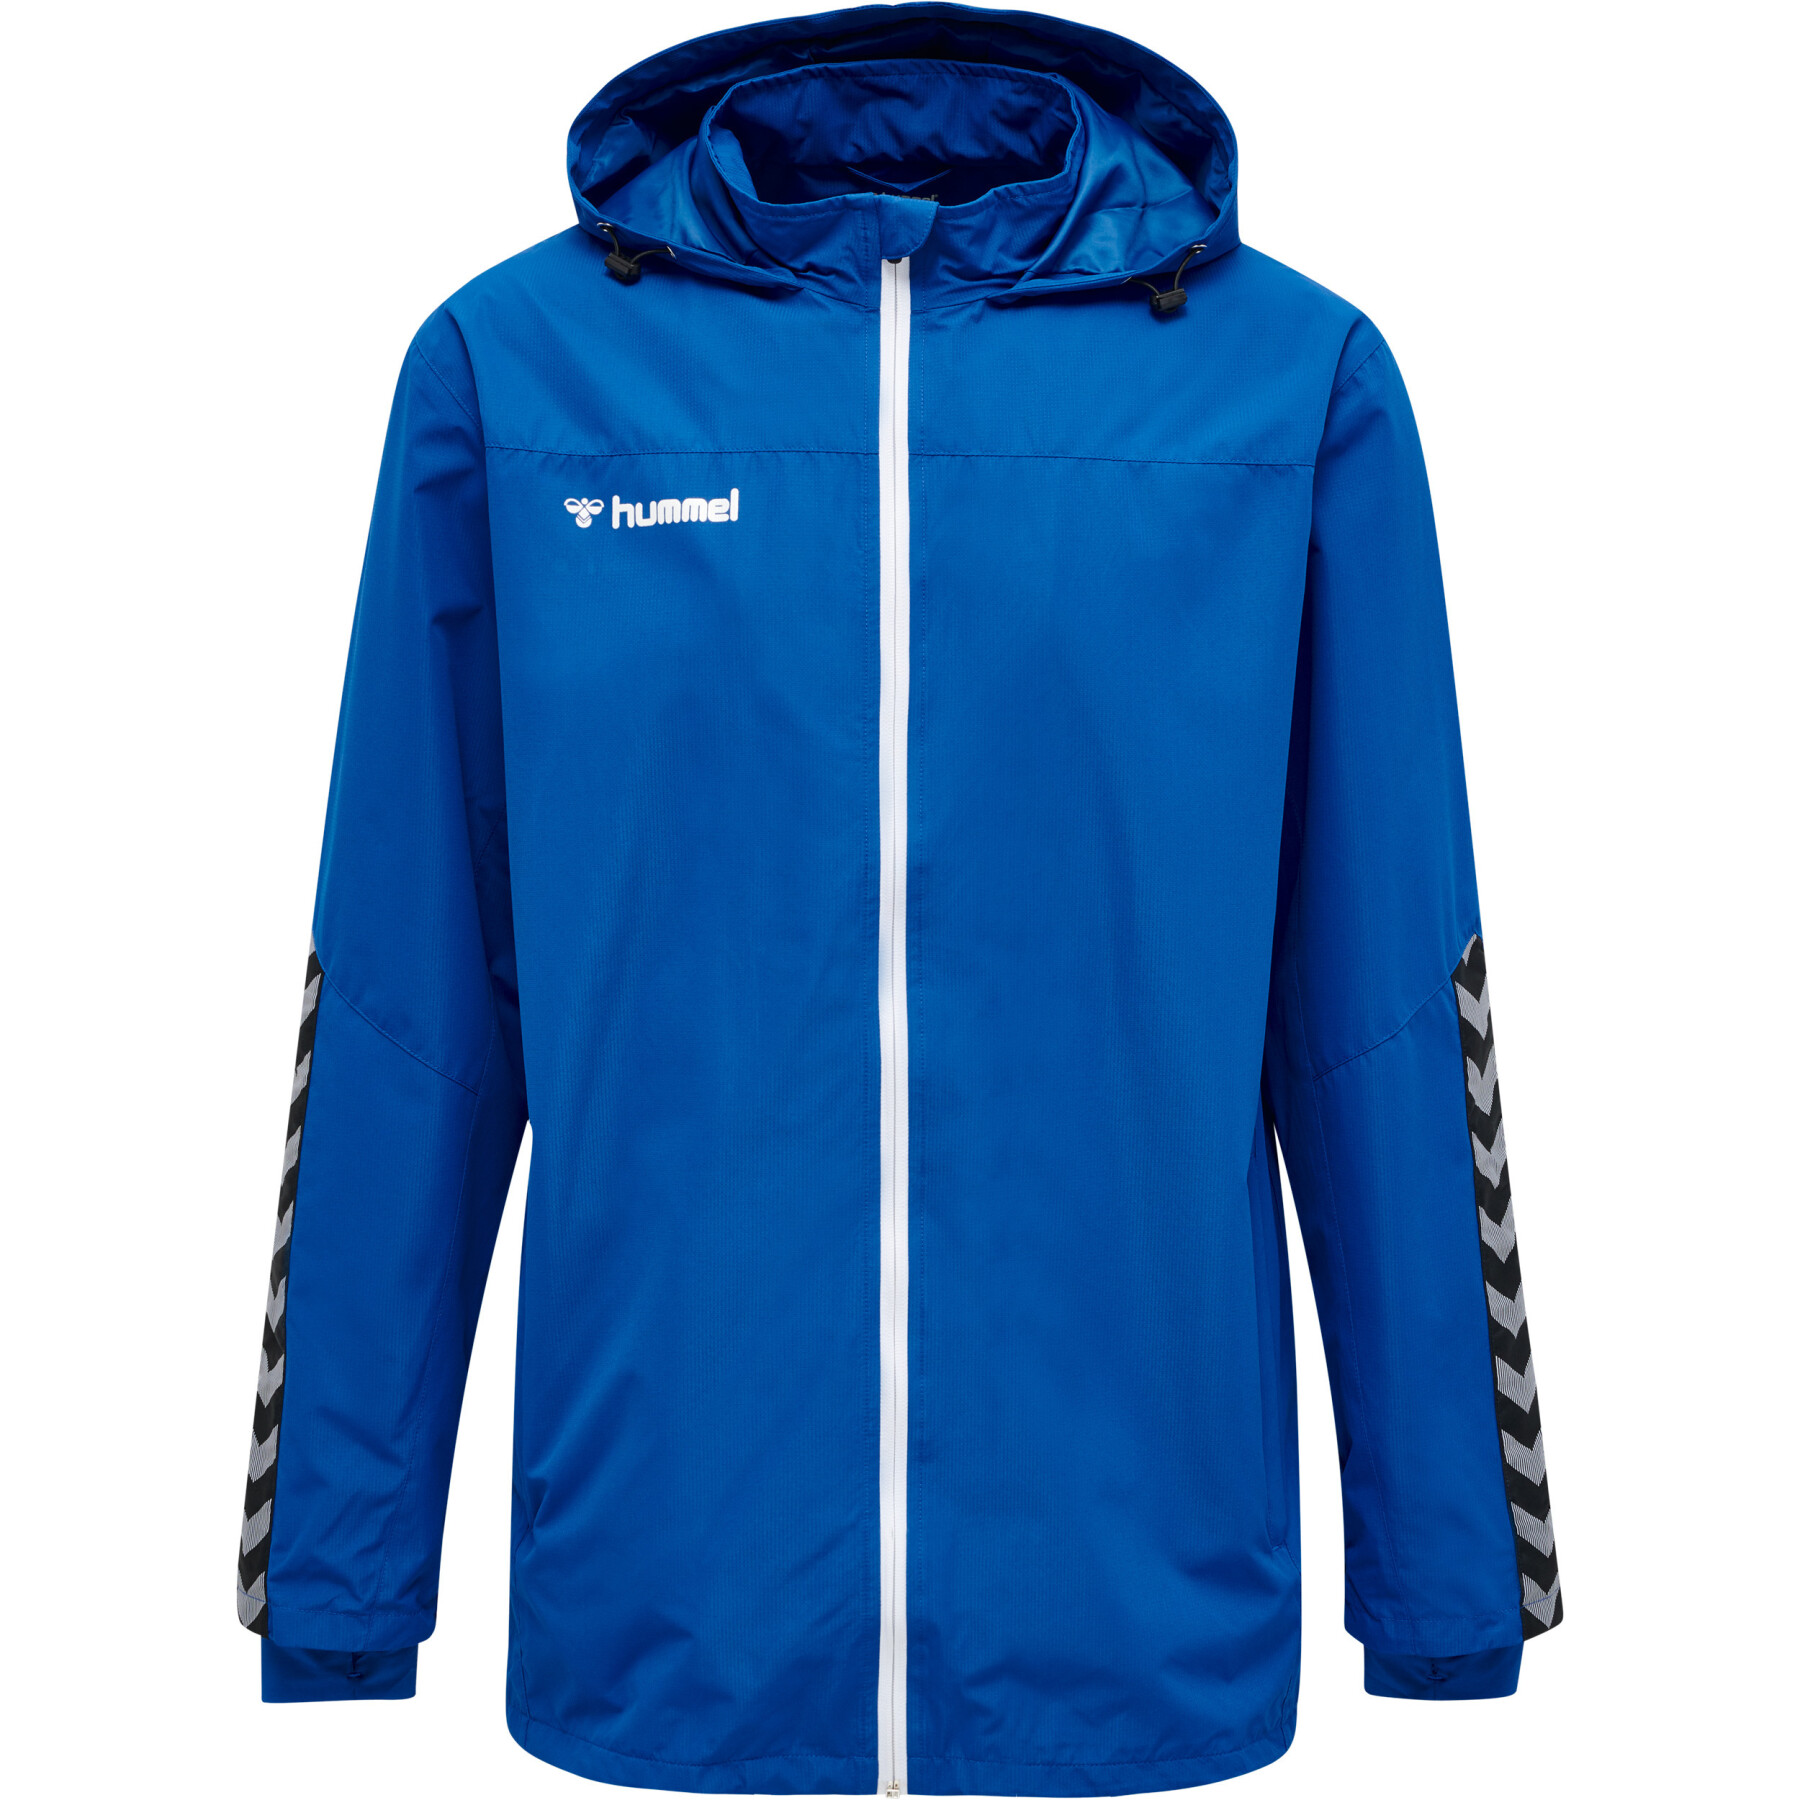 Jacket Hummel Authenctic All-Weather - Hummel - Brands - Handball wear